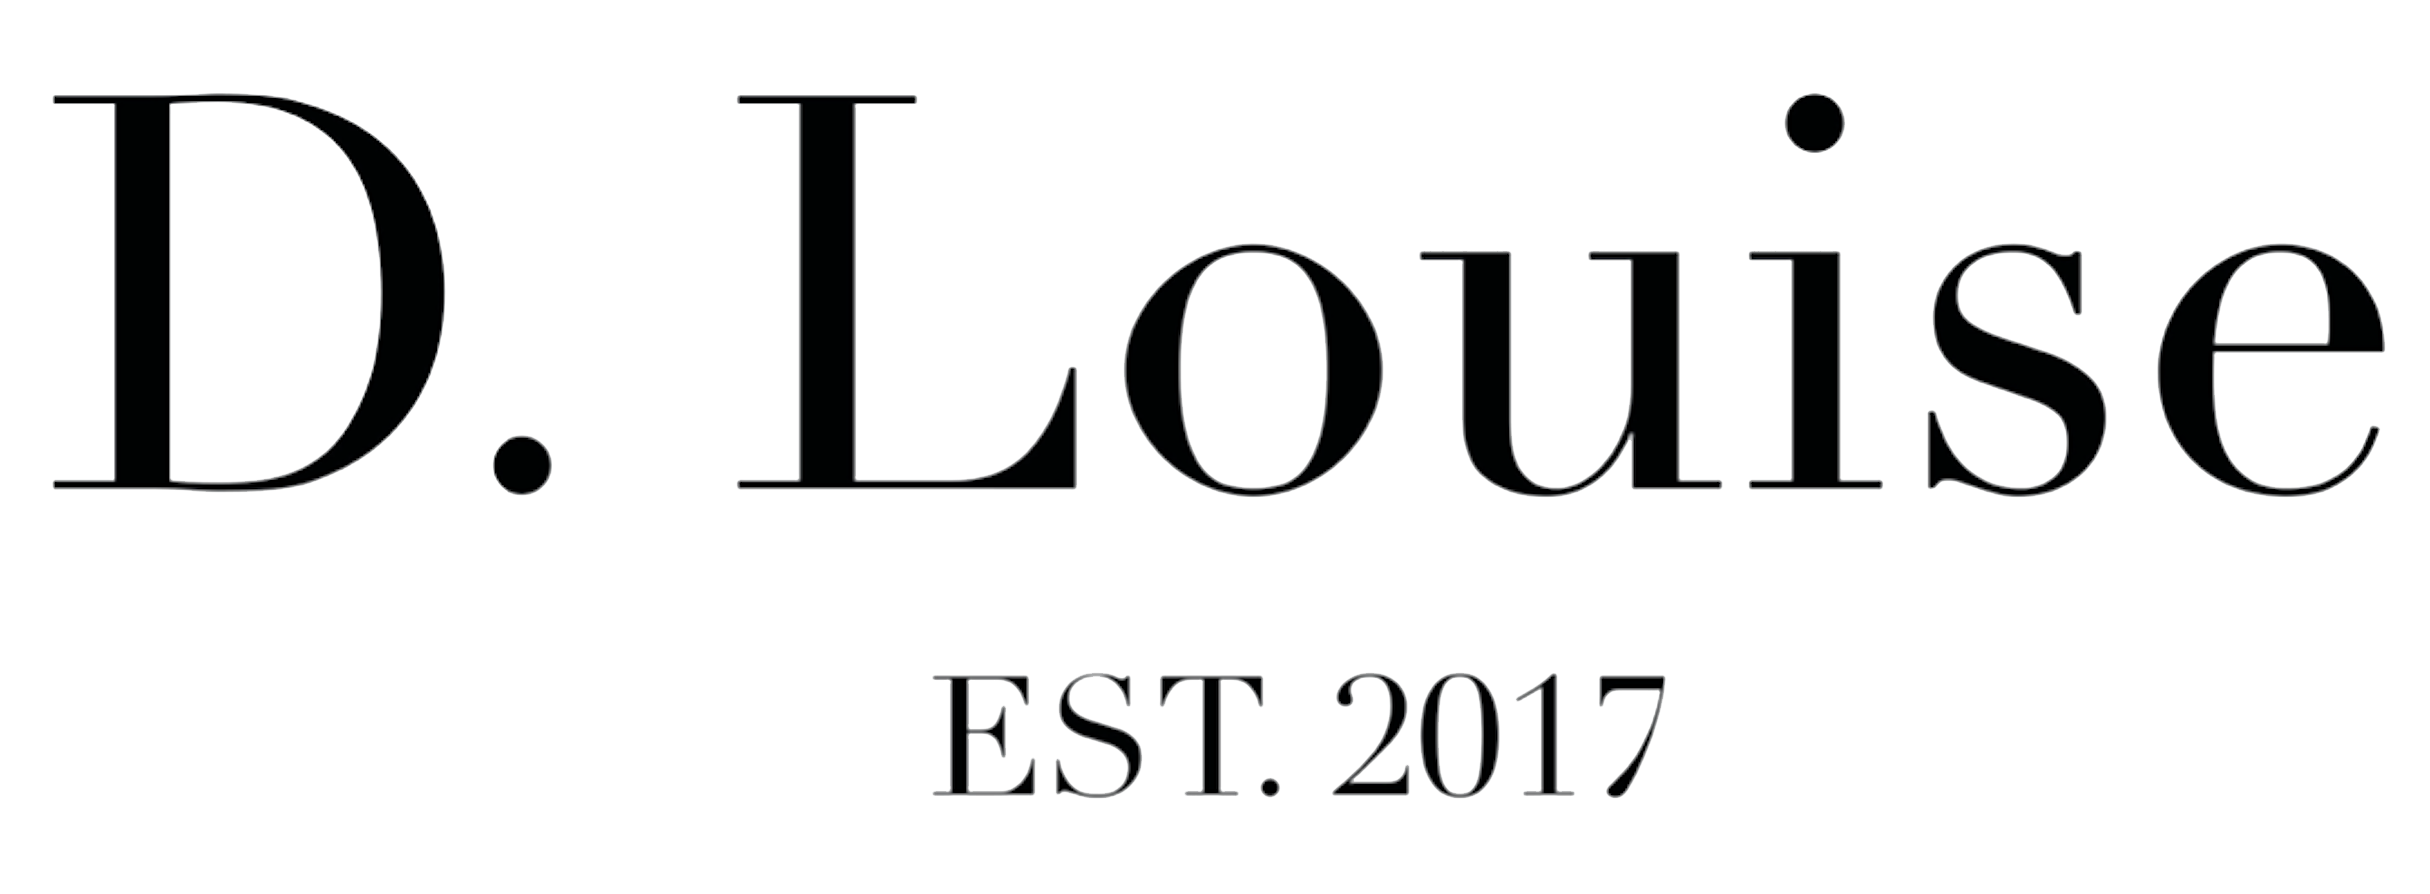 D. Louise logo